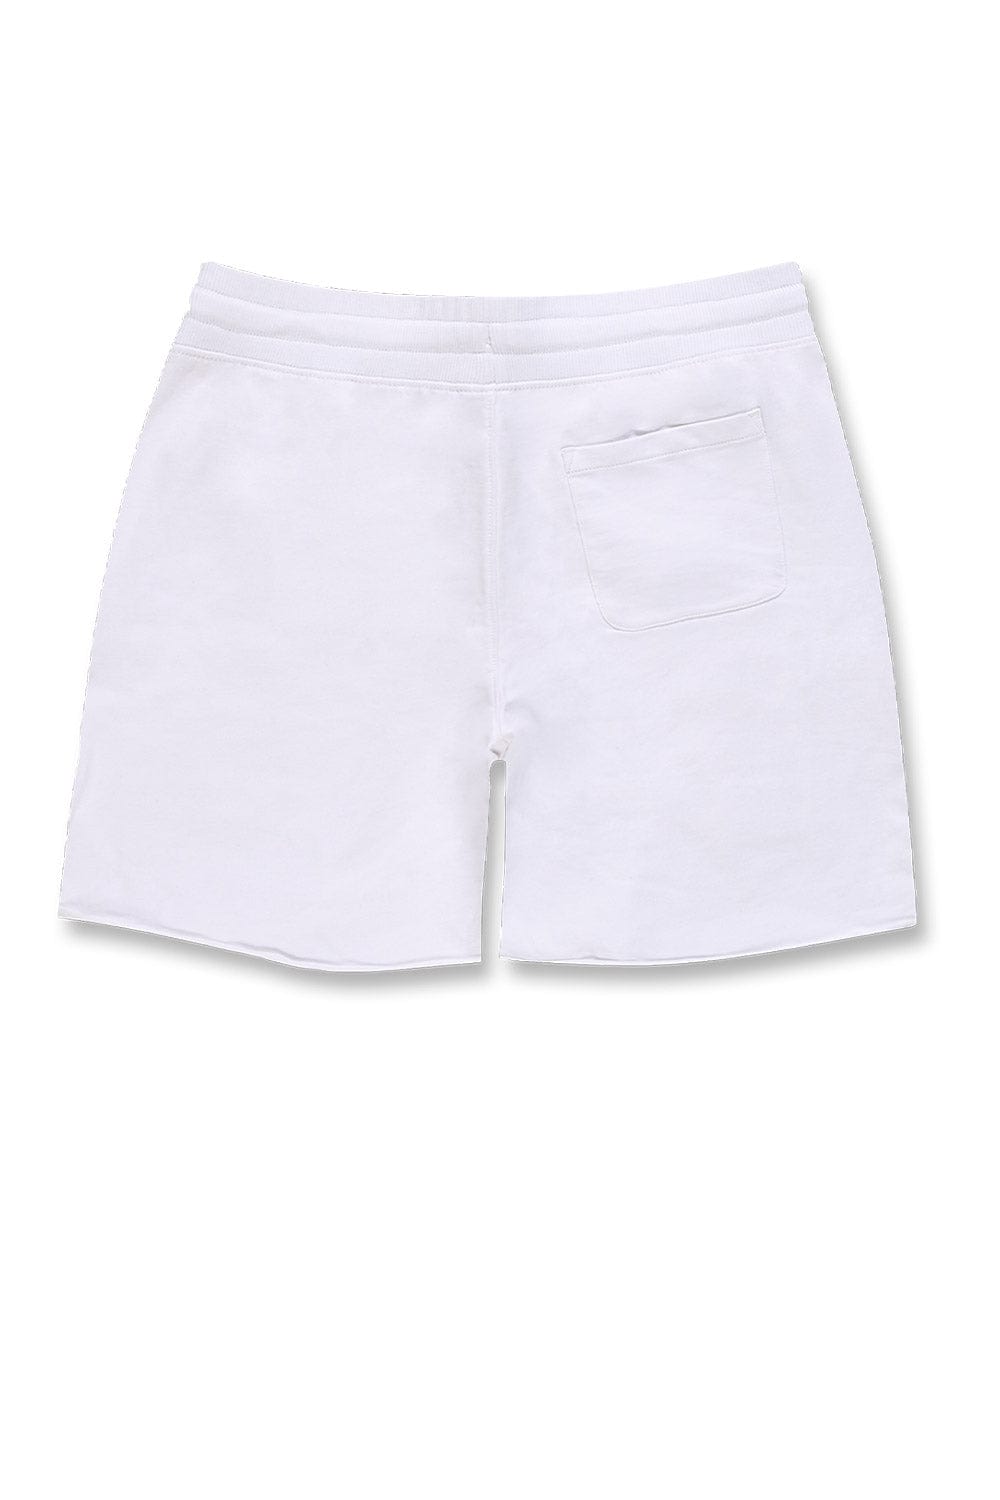 Jordan Craig Athletic - Summer Breeze Knit Shorts